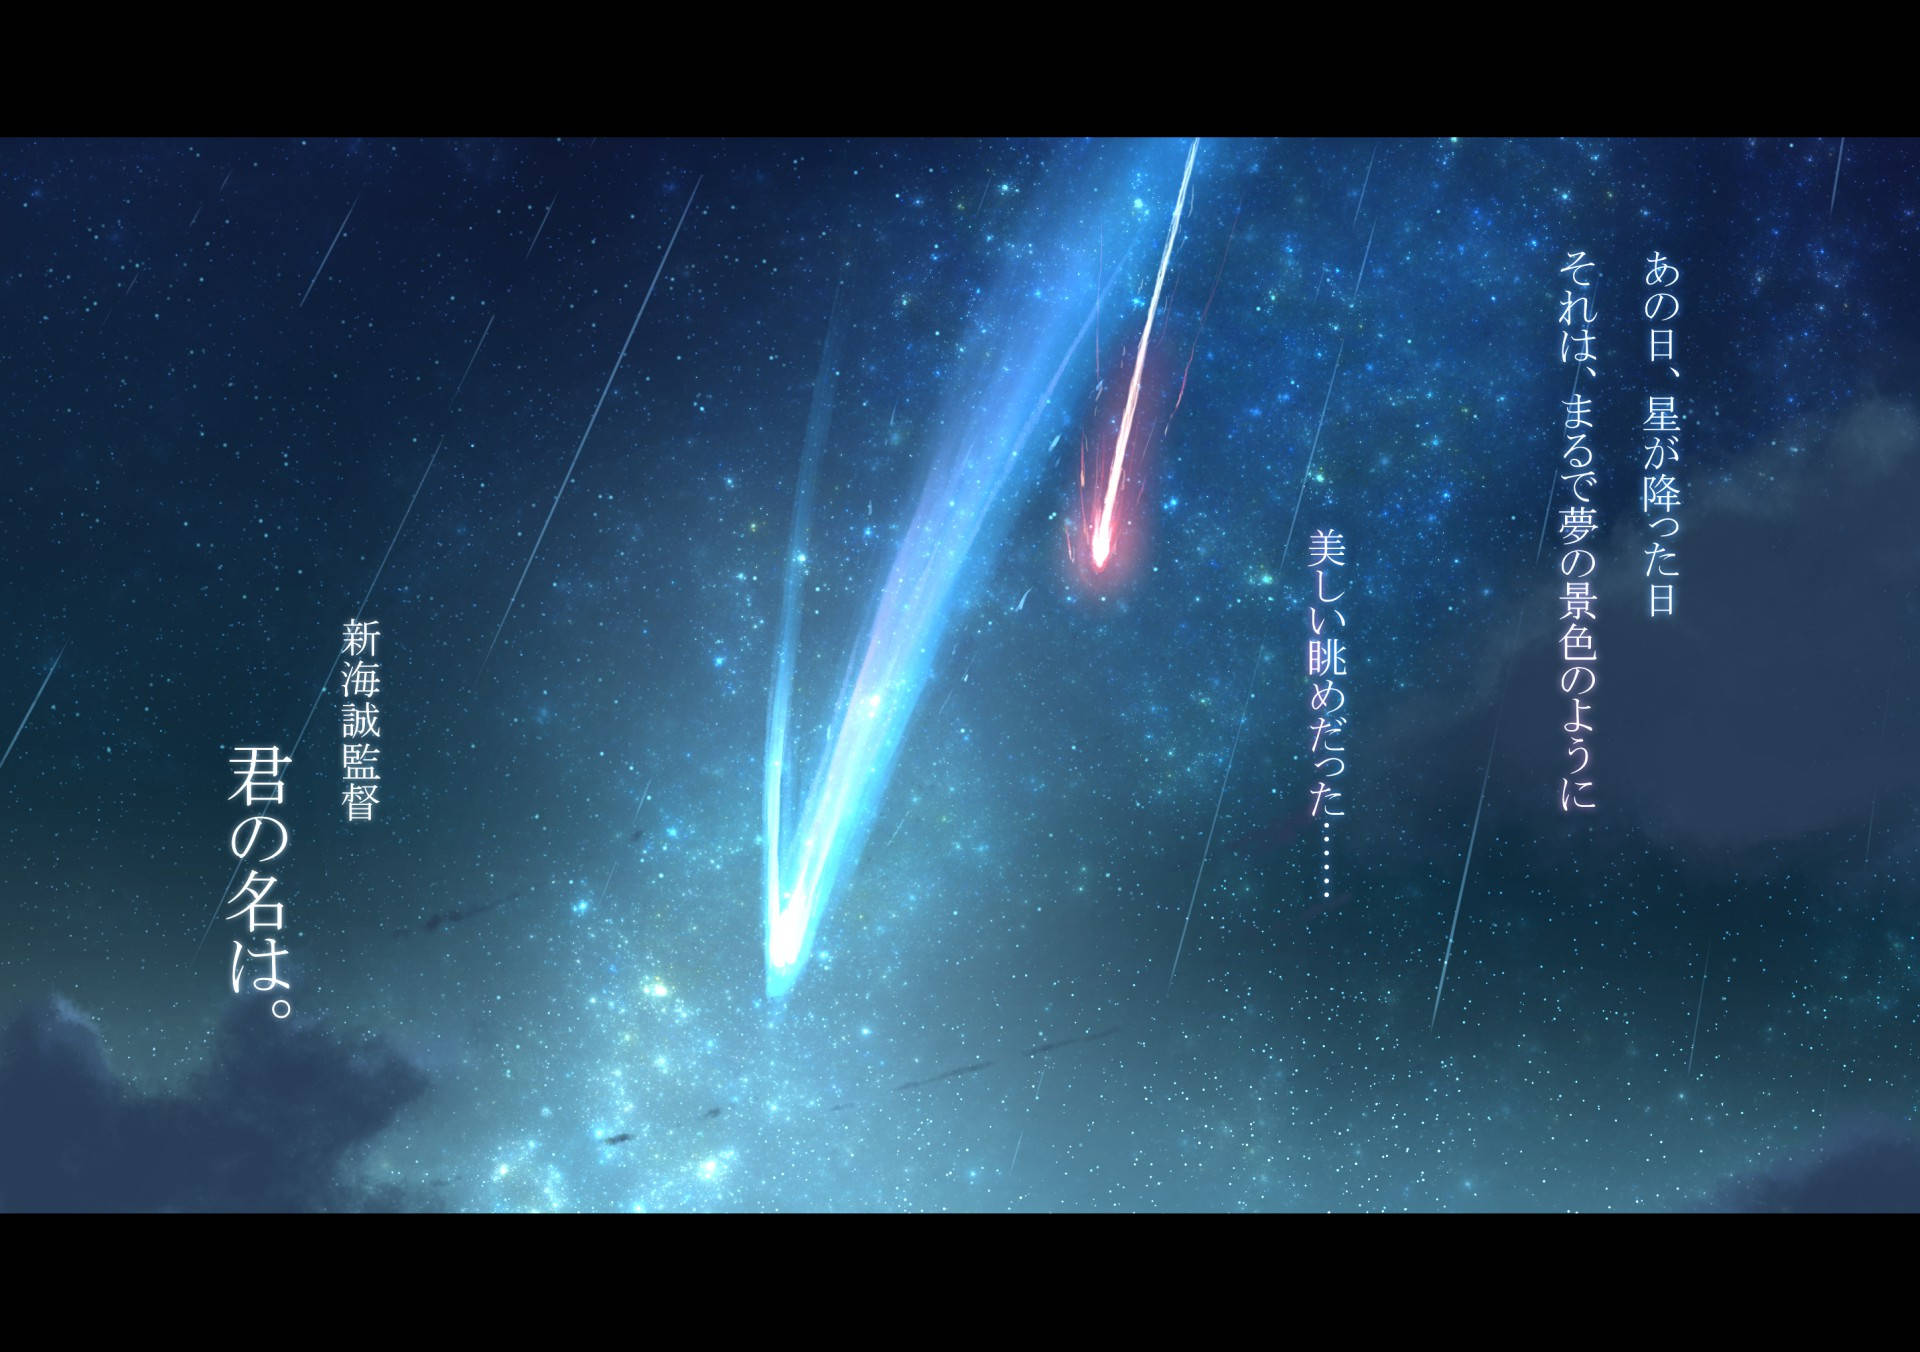 Sky Comet Your Name Anime 2016 Wallpaper